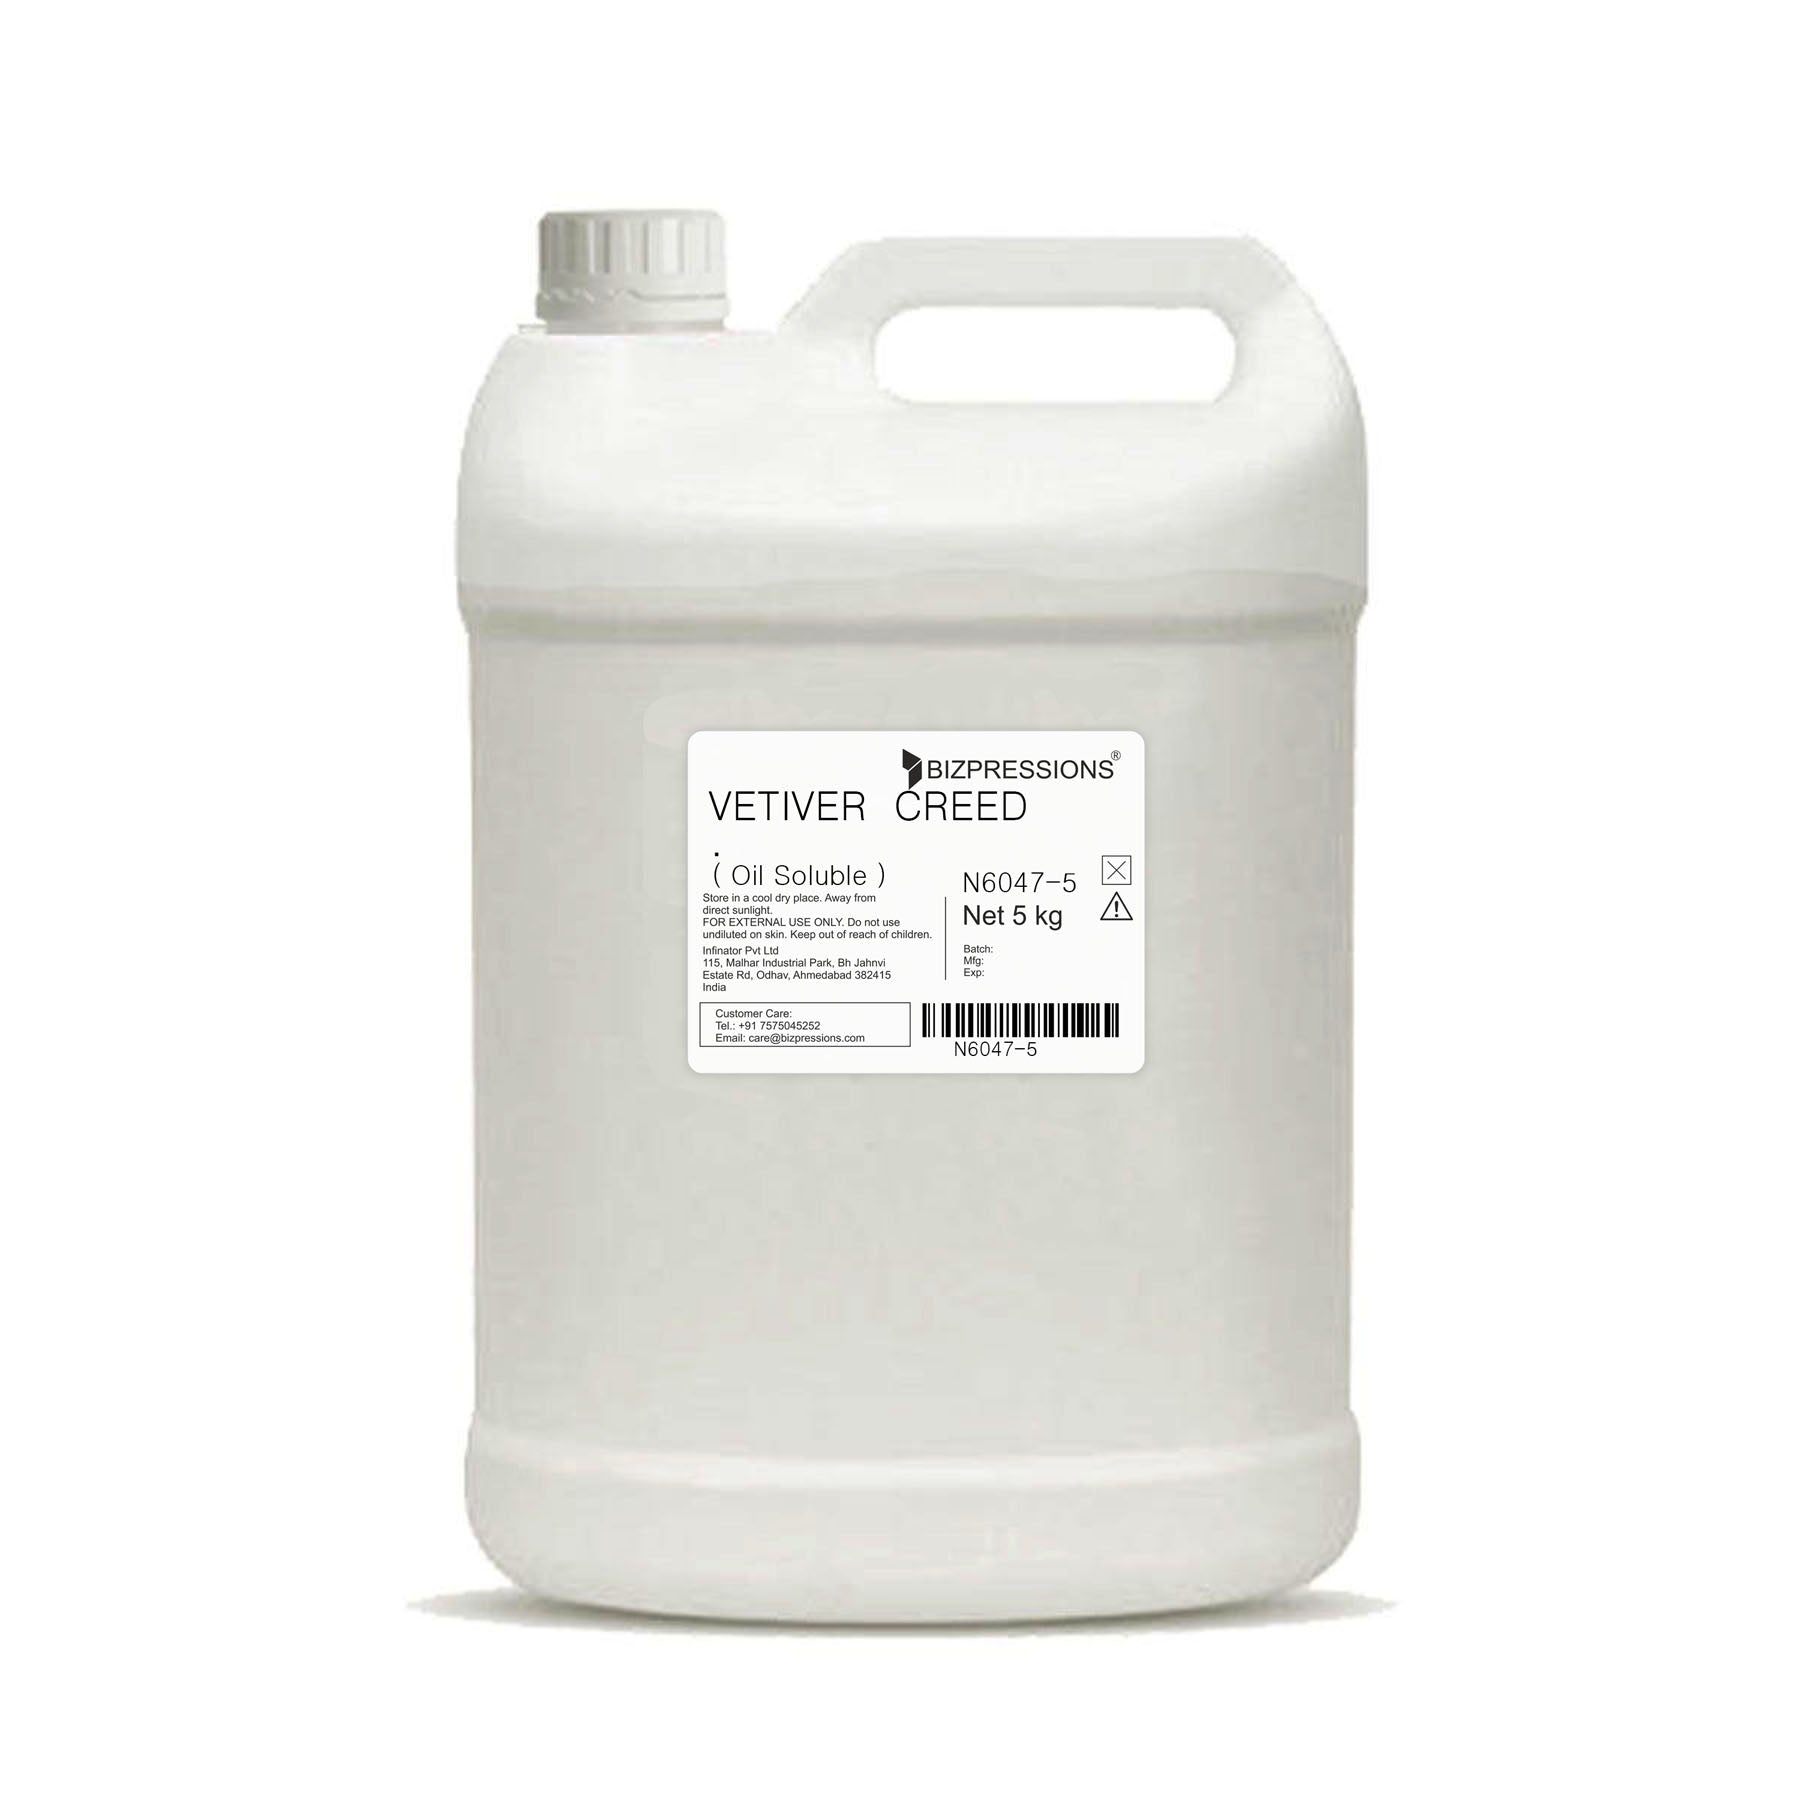 VETIVER CREED - Fragrance ( Oil Soluble ) - 5 kg